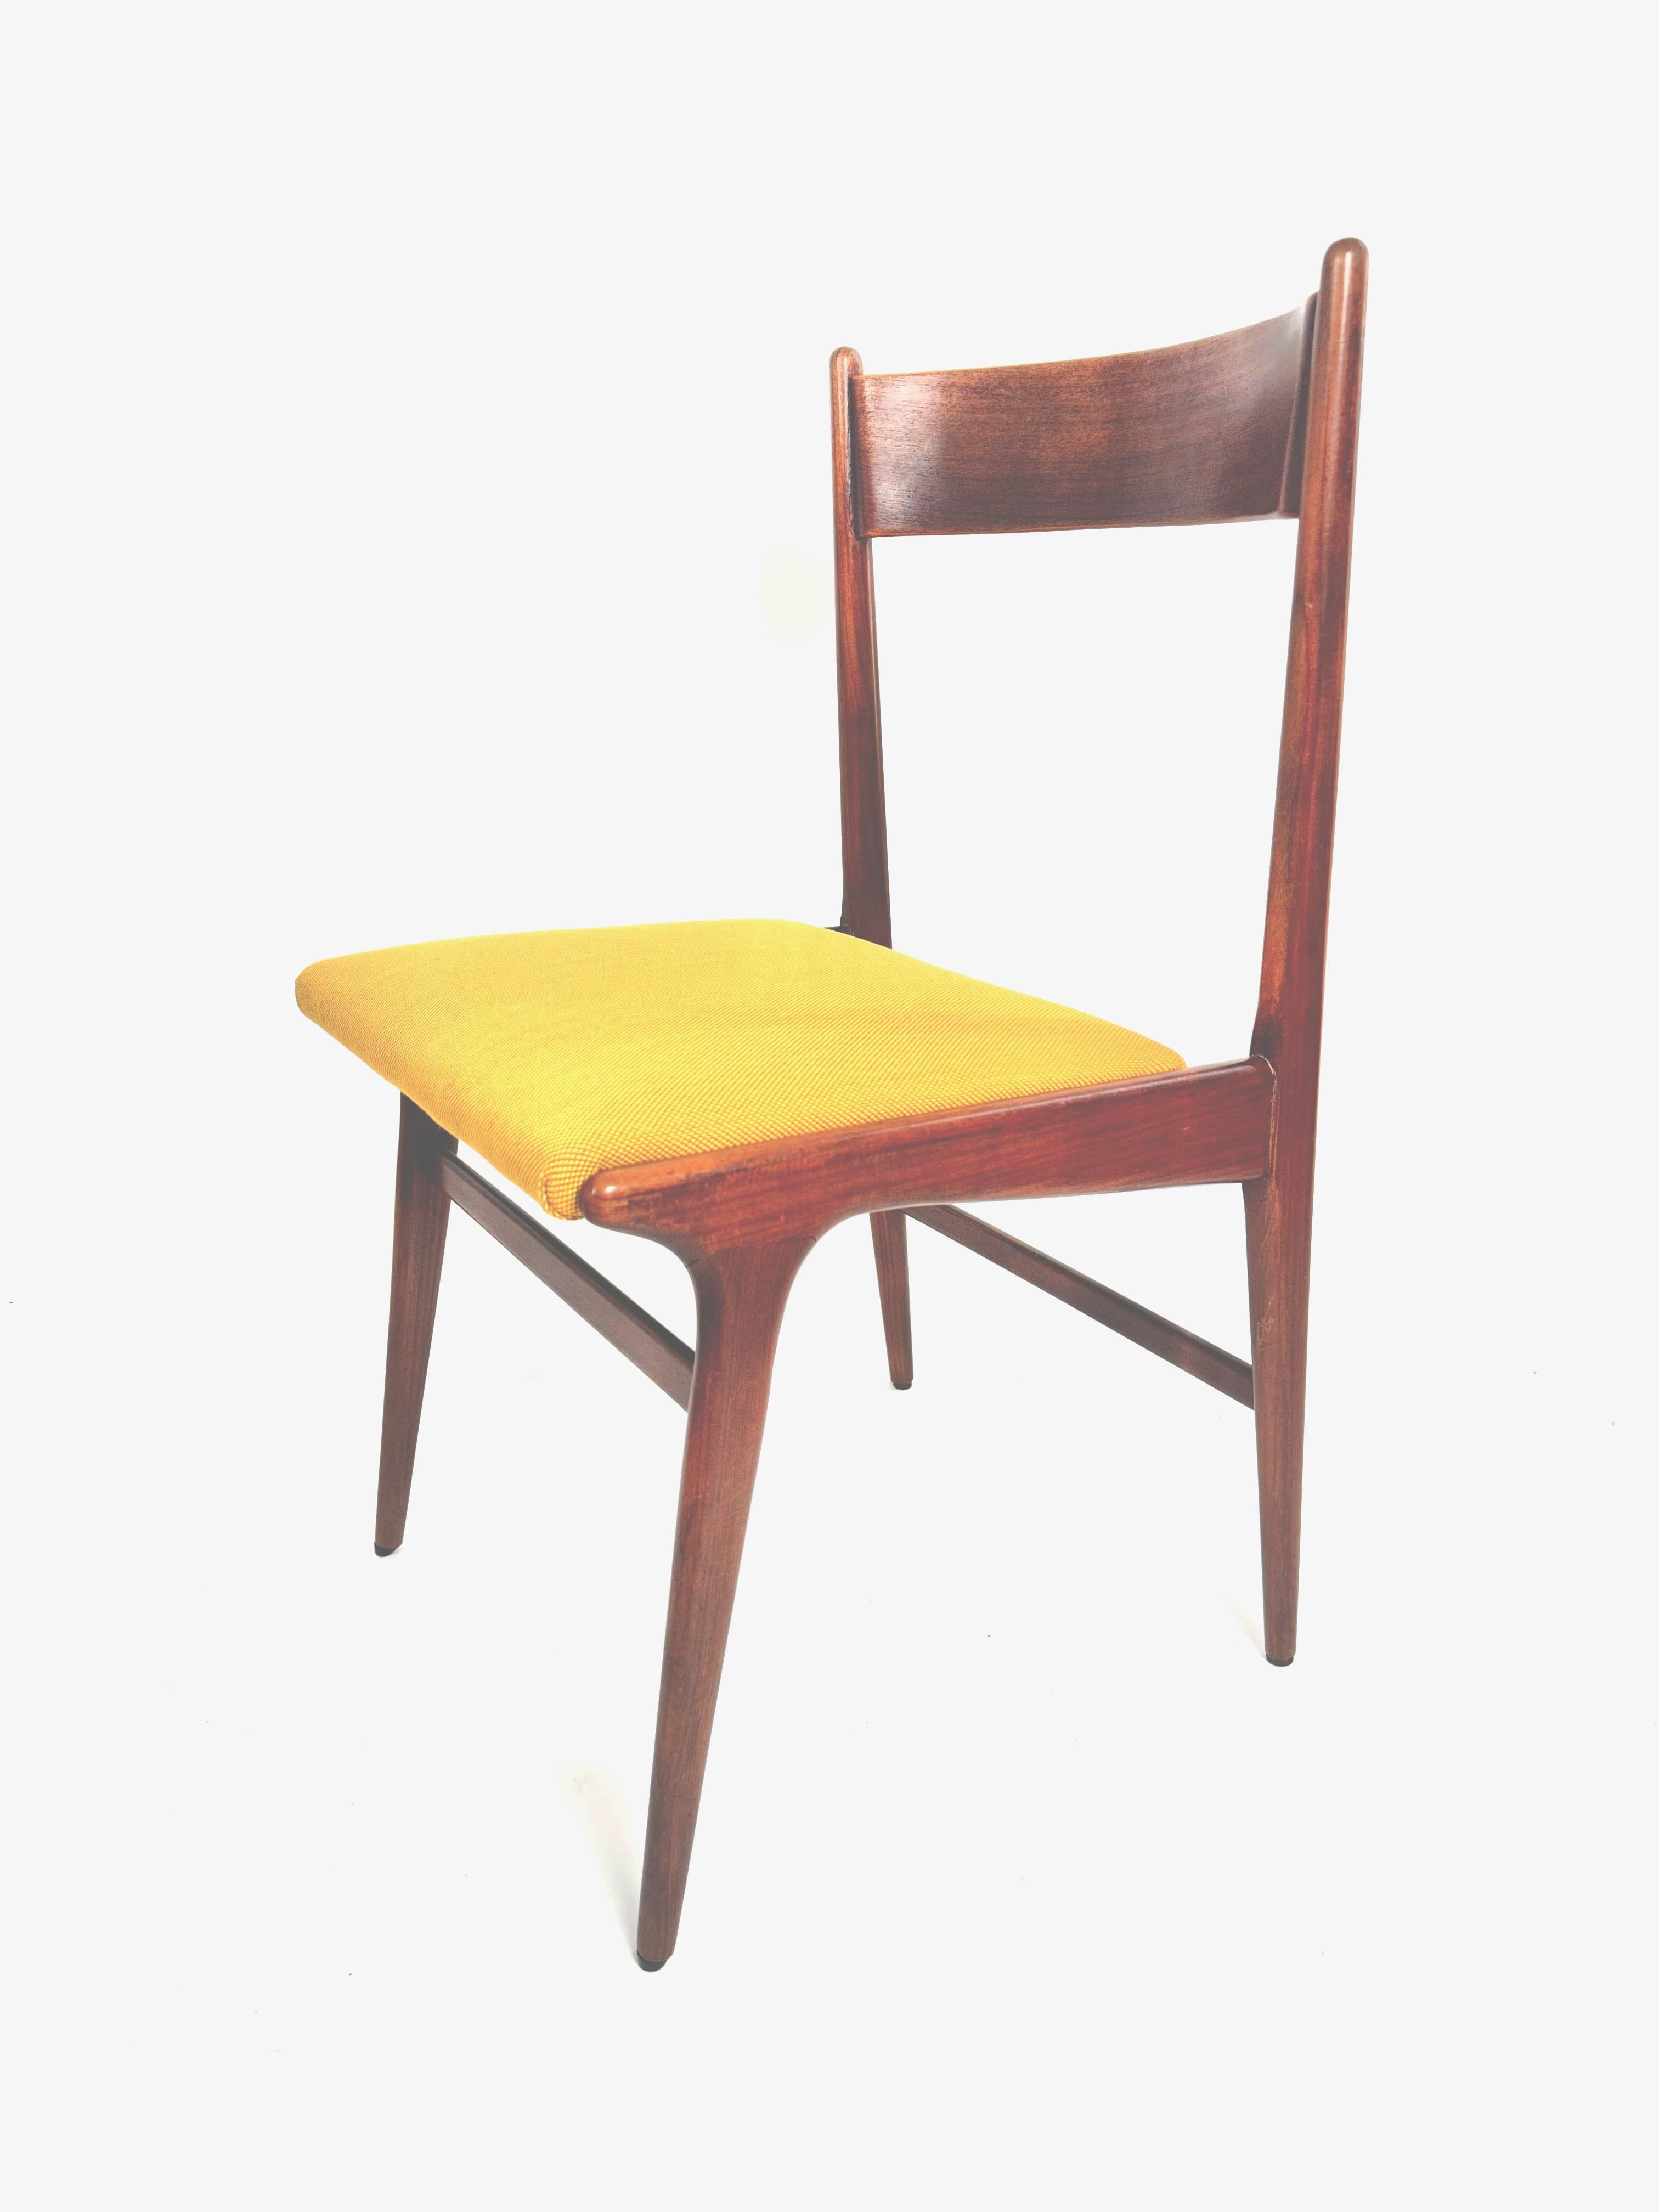 Carlo de Carli MidSet of Four Teak Dining Chairs in Kvadrat Yello Fabric, 1960s For Sale 11